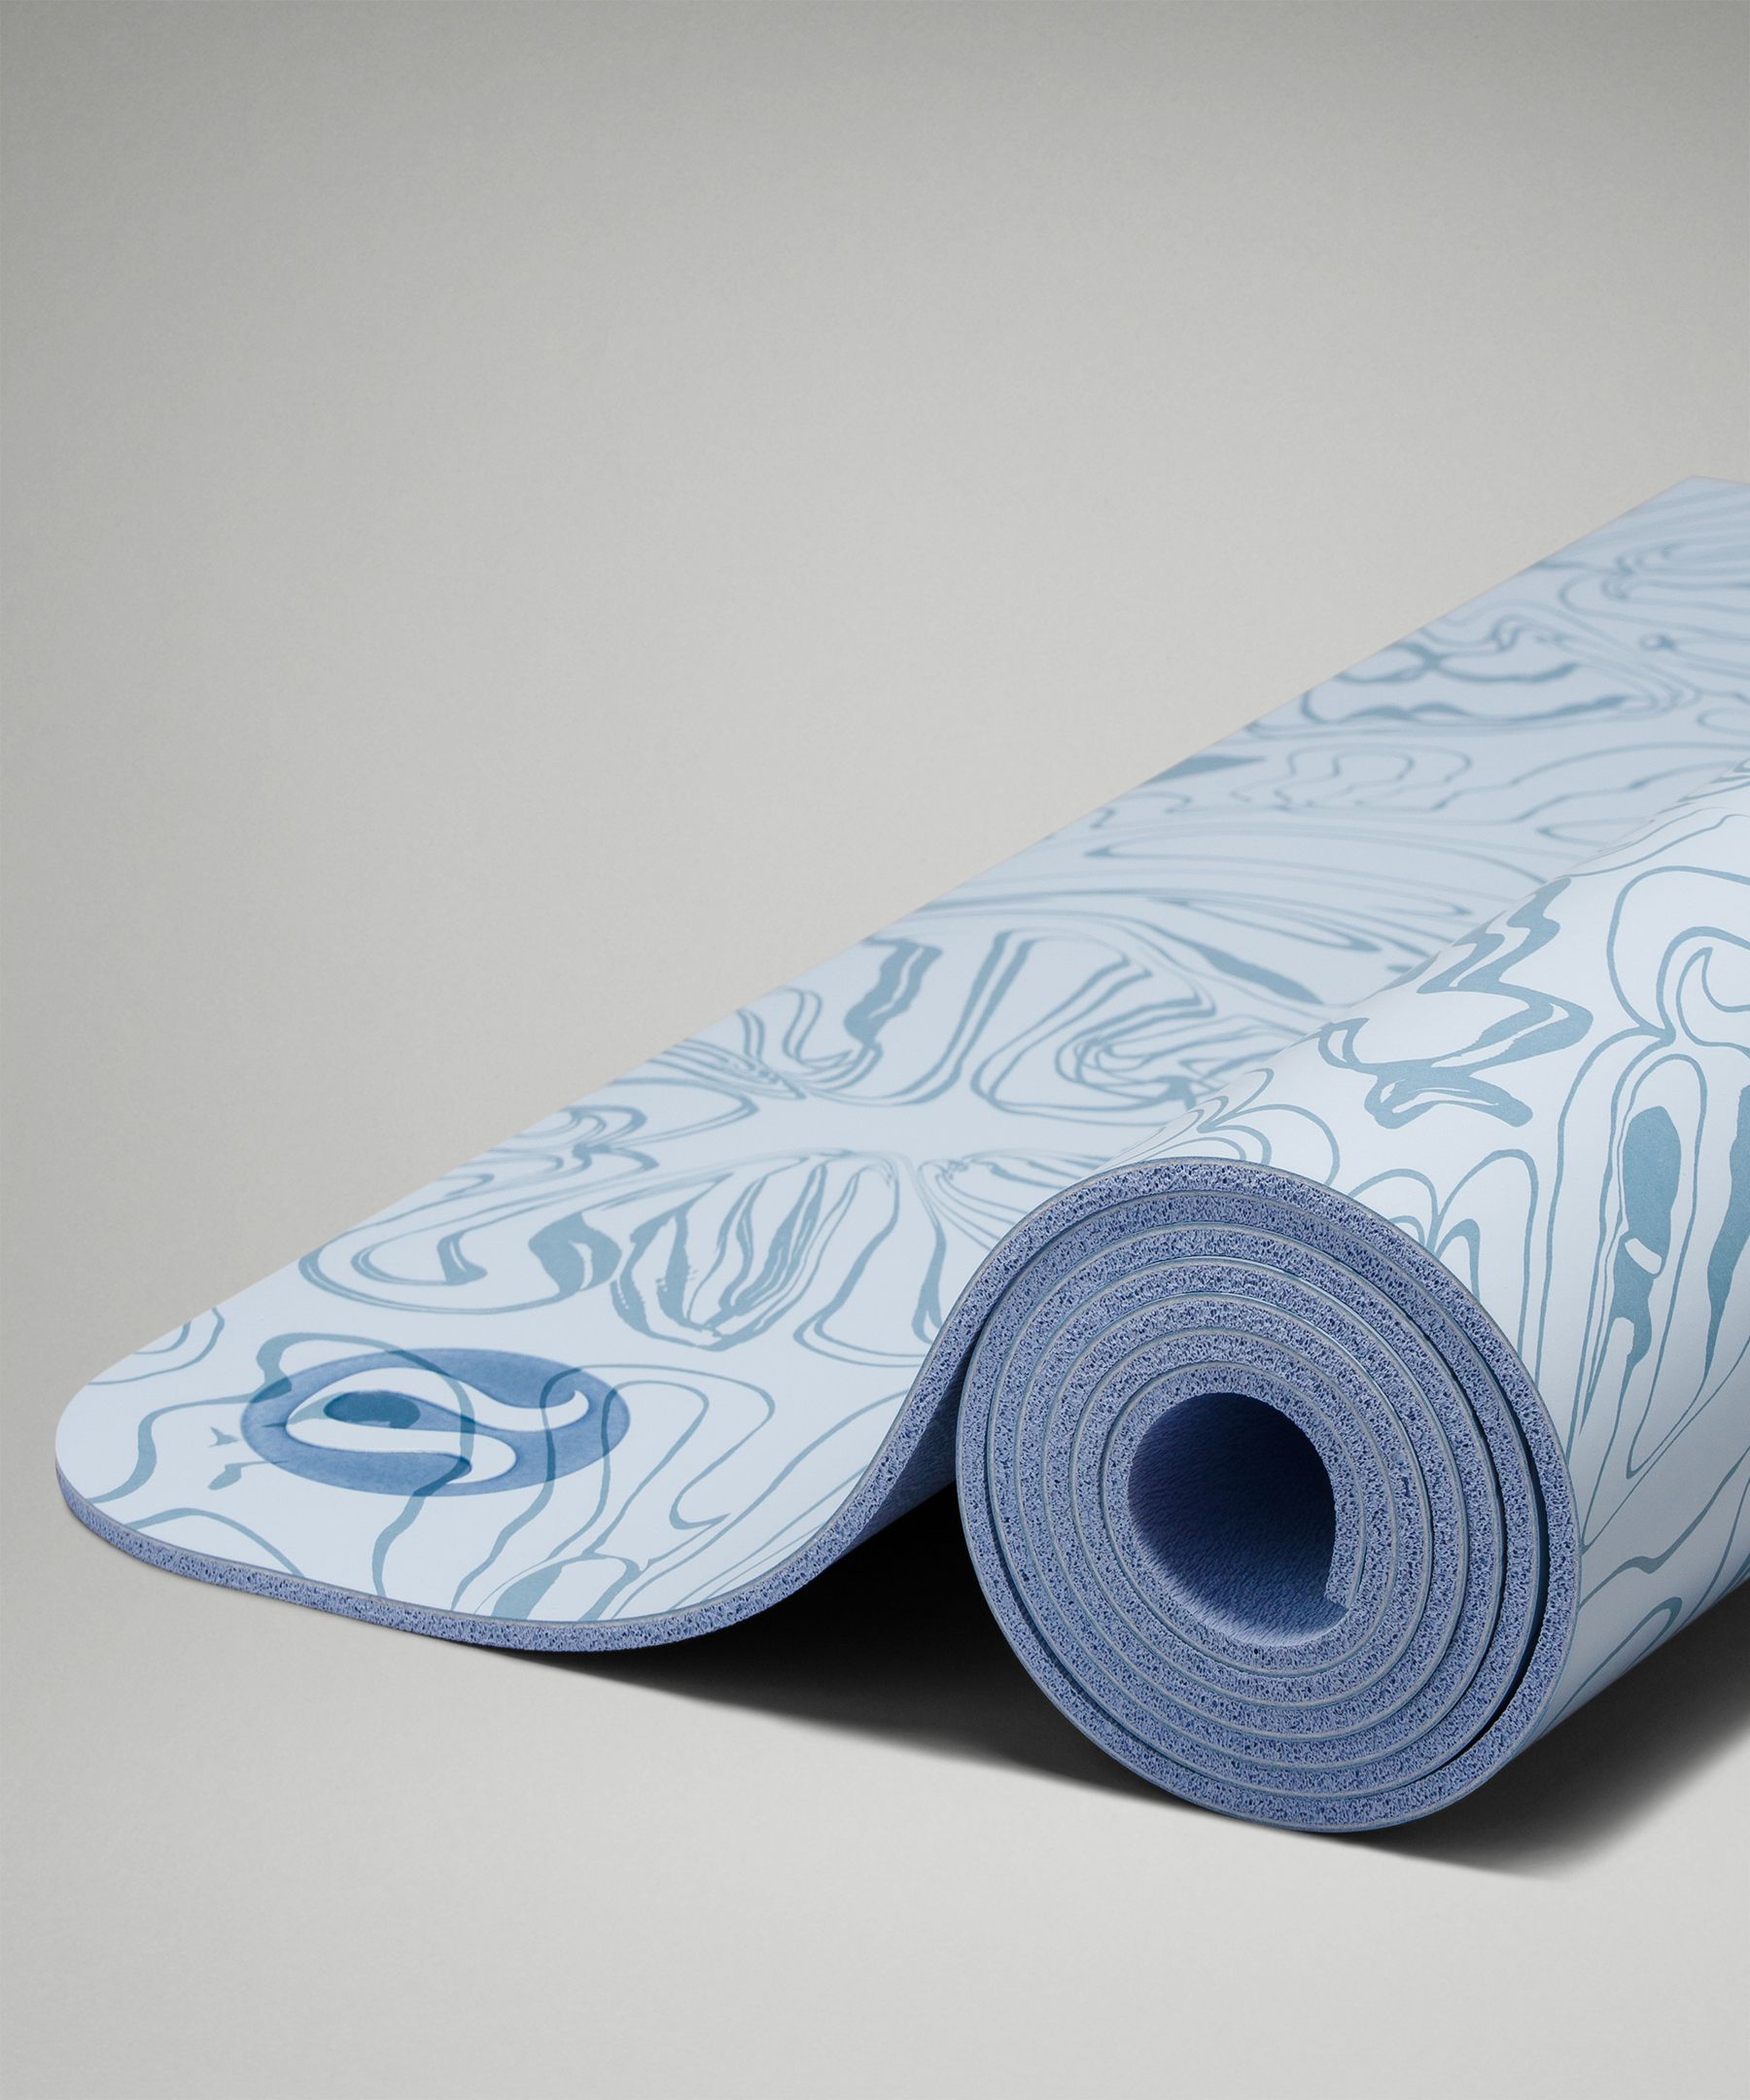 The Yoga Mat Bag - Resale